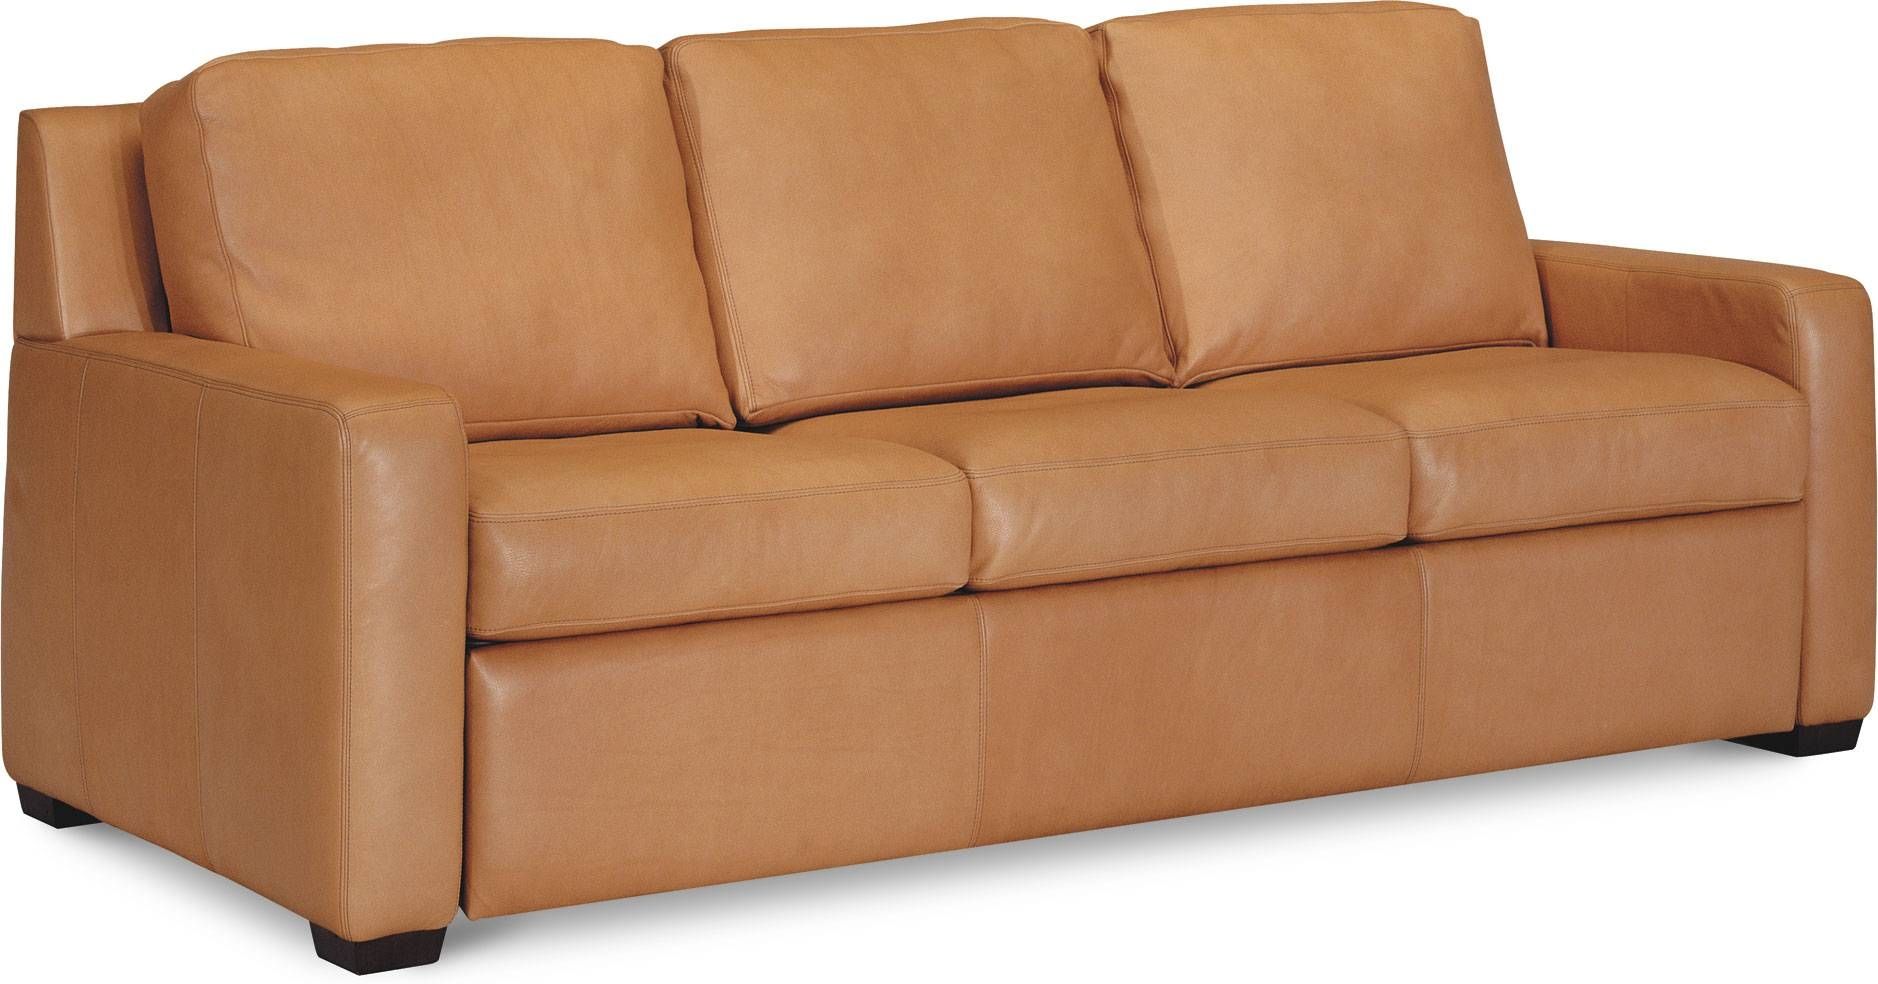 70 Sleeper Sofa – Leather Sectional Sofa Inside 70 Sleeper Sofa (View 23 of 30)